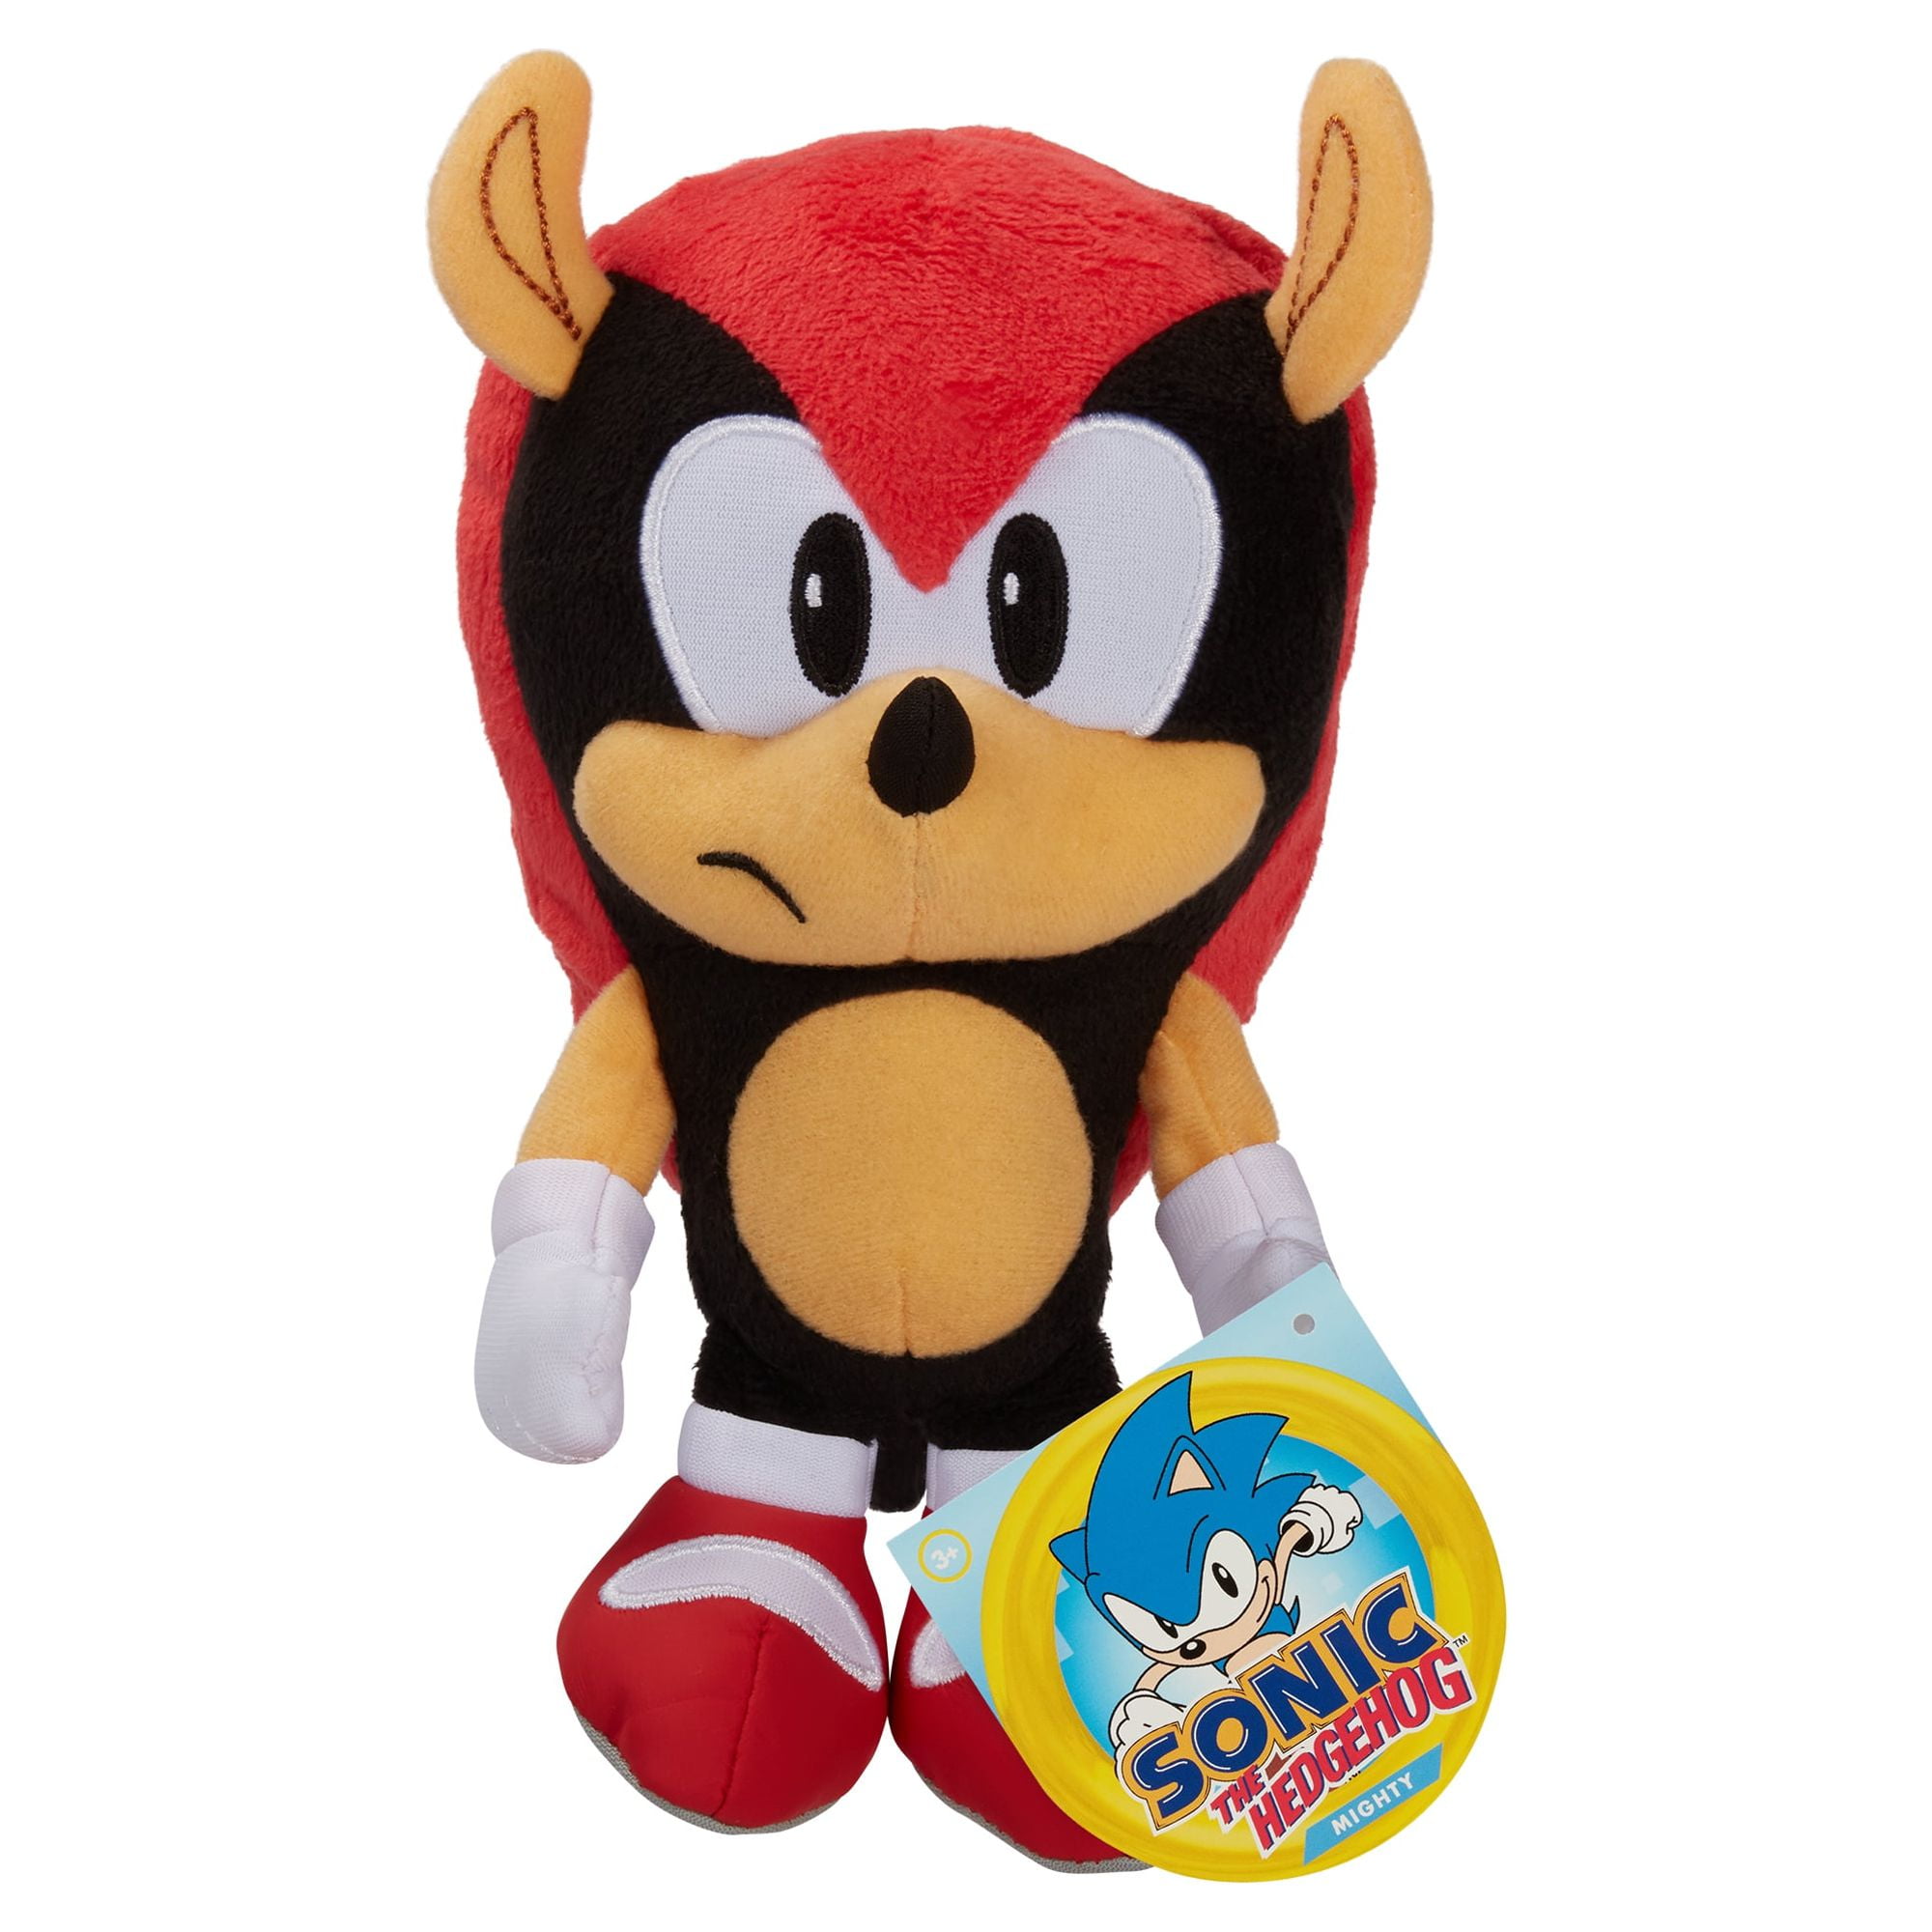 Mighty the Armadillo (Sonic) Custom Action Figure